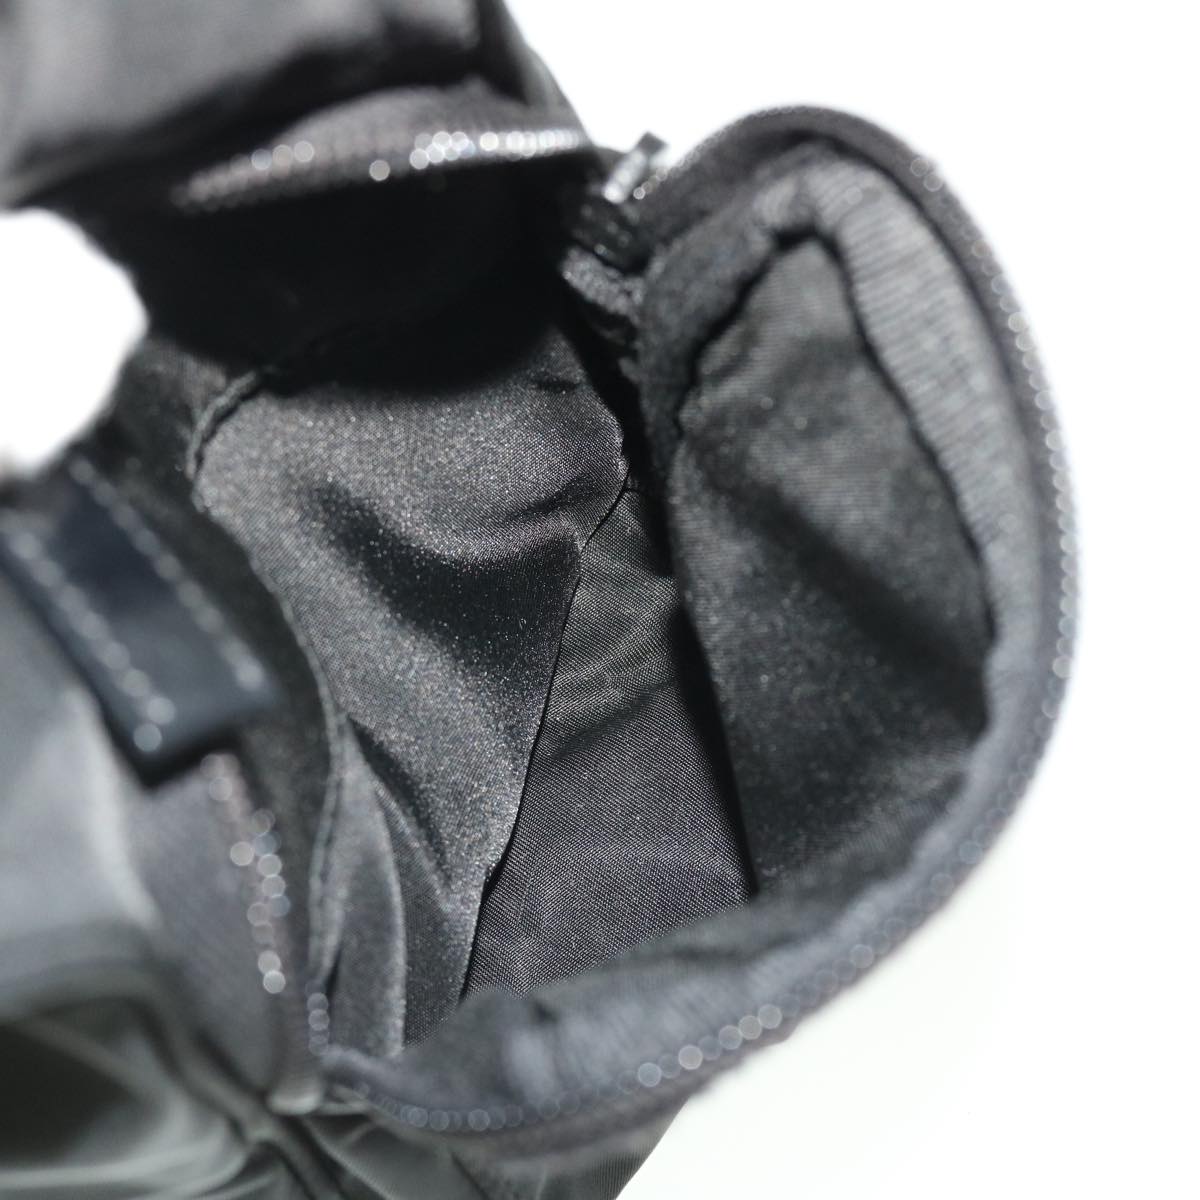 PRADA Shoulder Bag Nylon Black Auth 50561